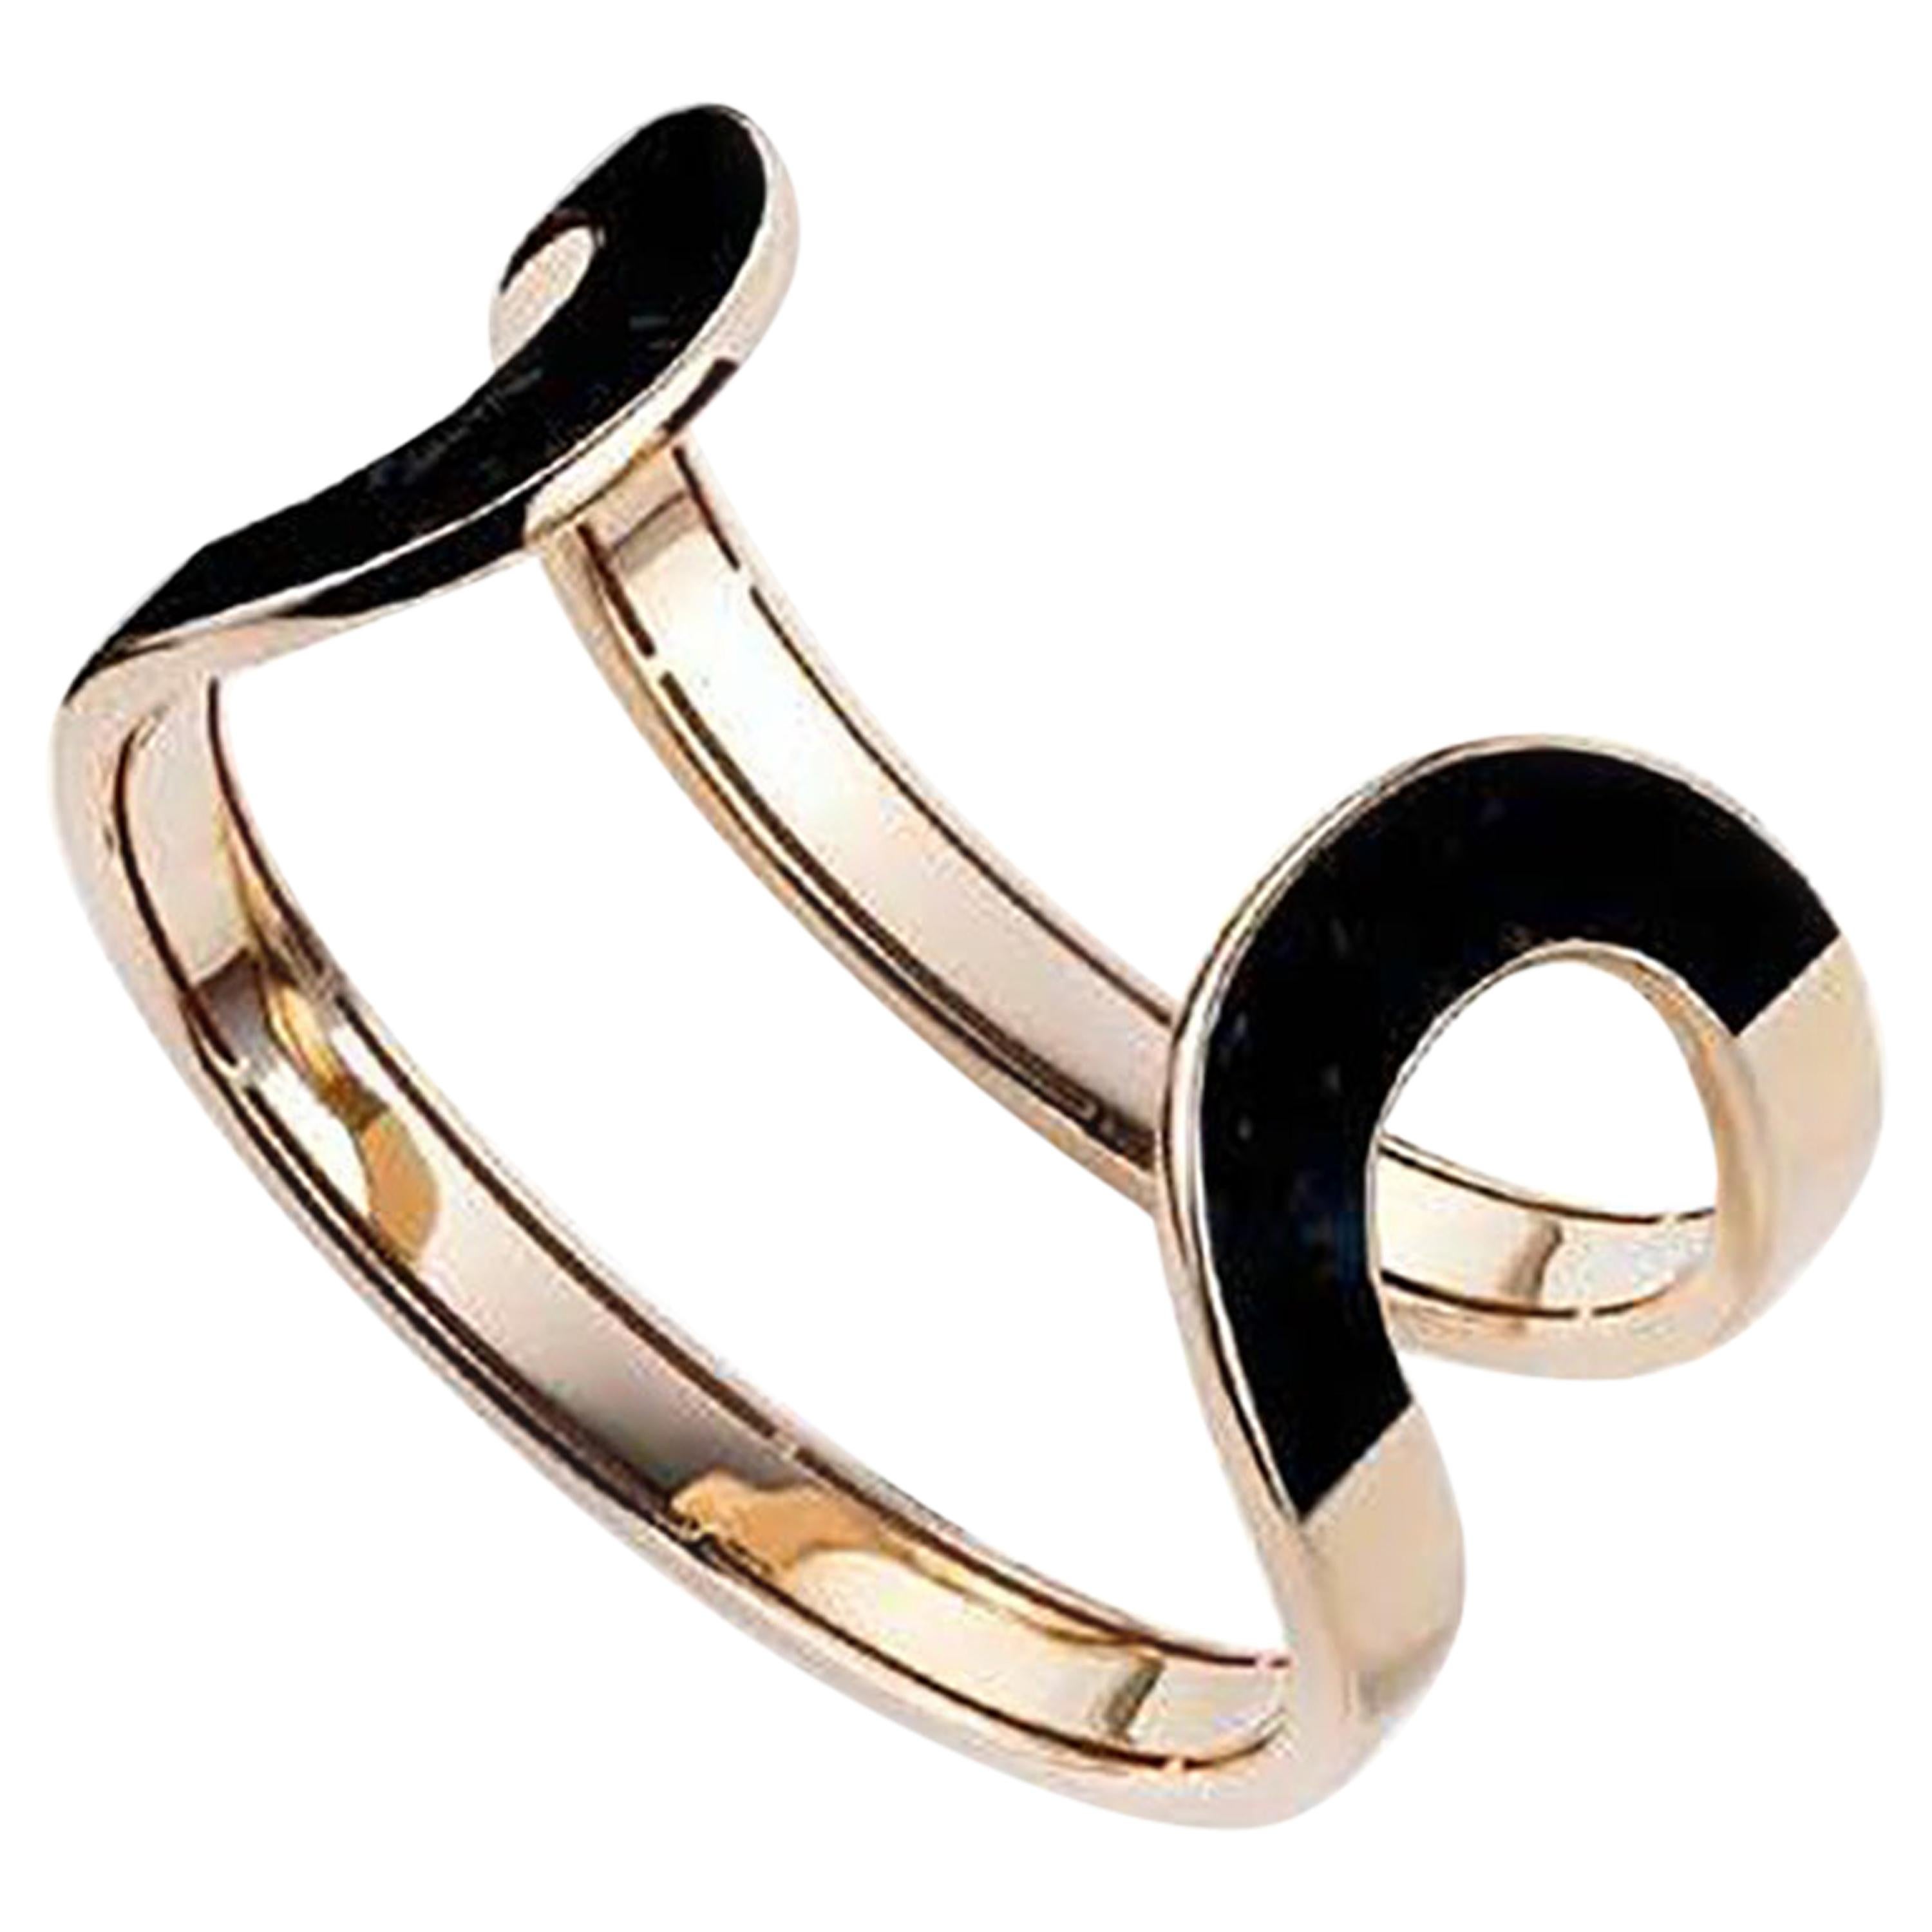 Mattioli Aruba Cuff Bracelet in Rose Gold and Black Onyx For Sale